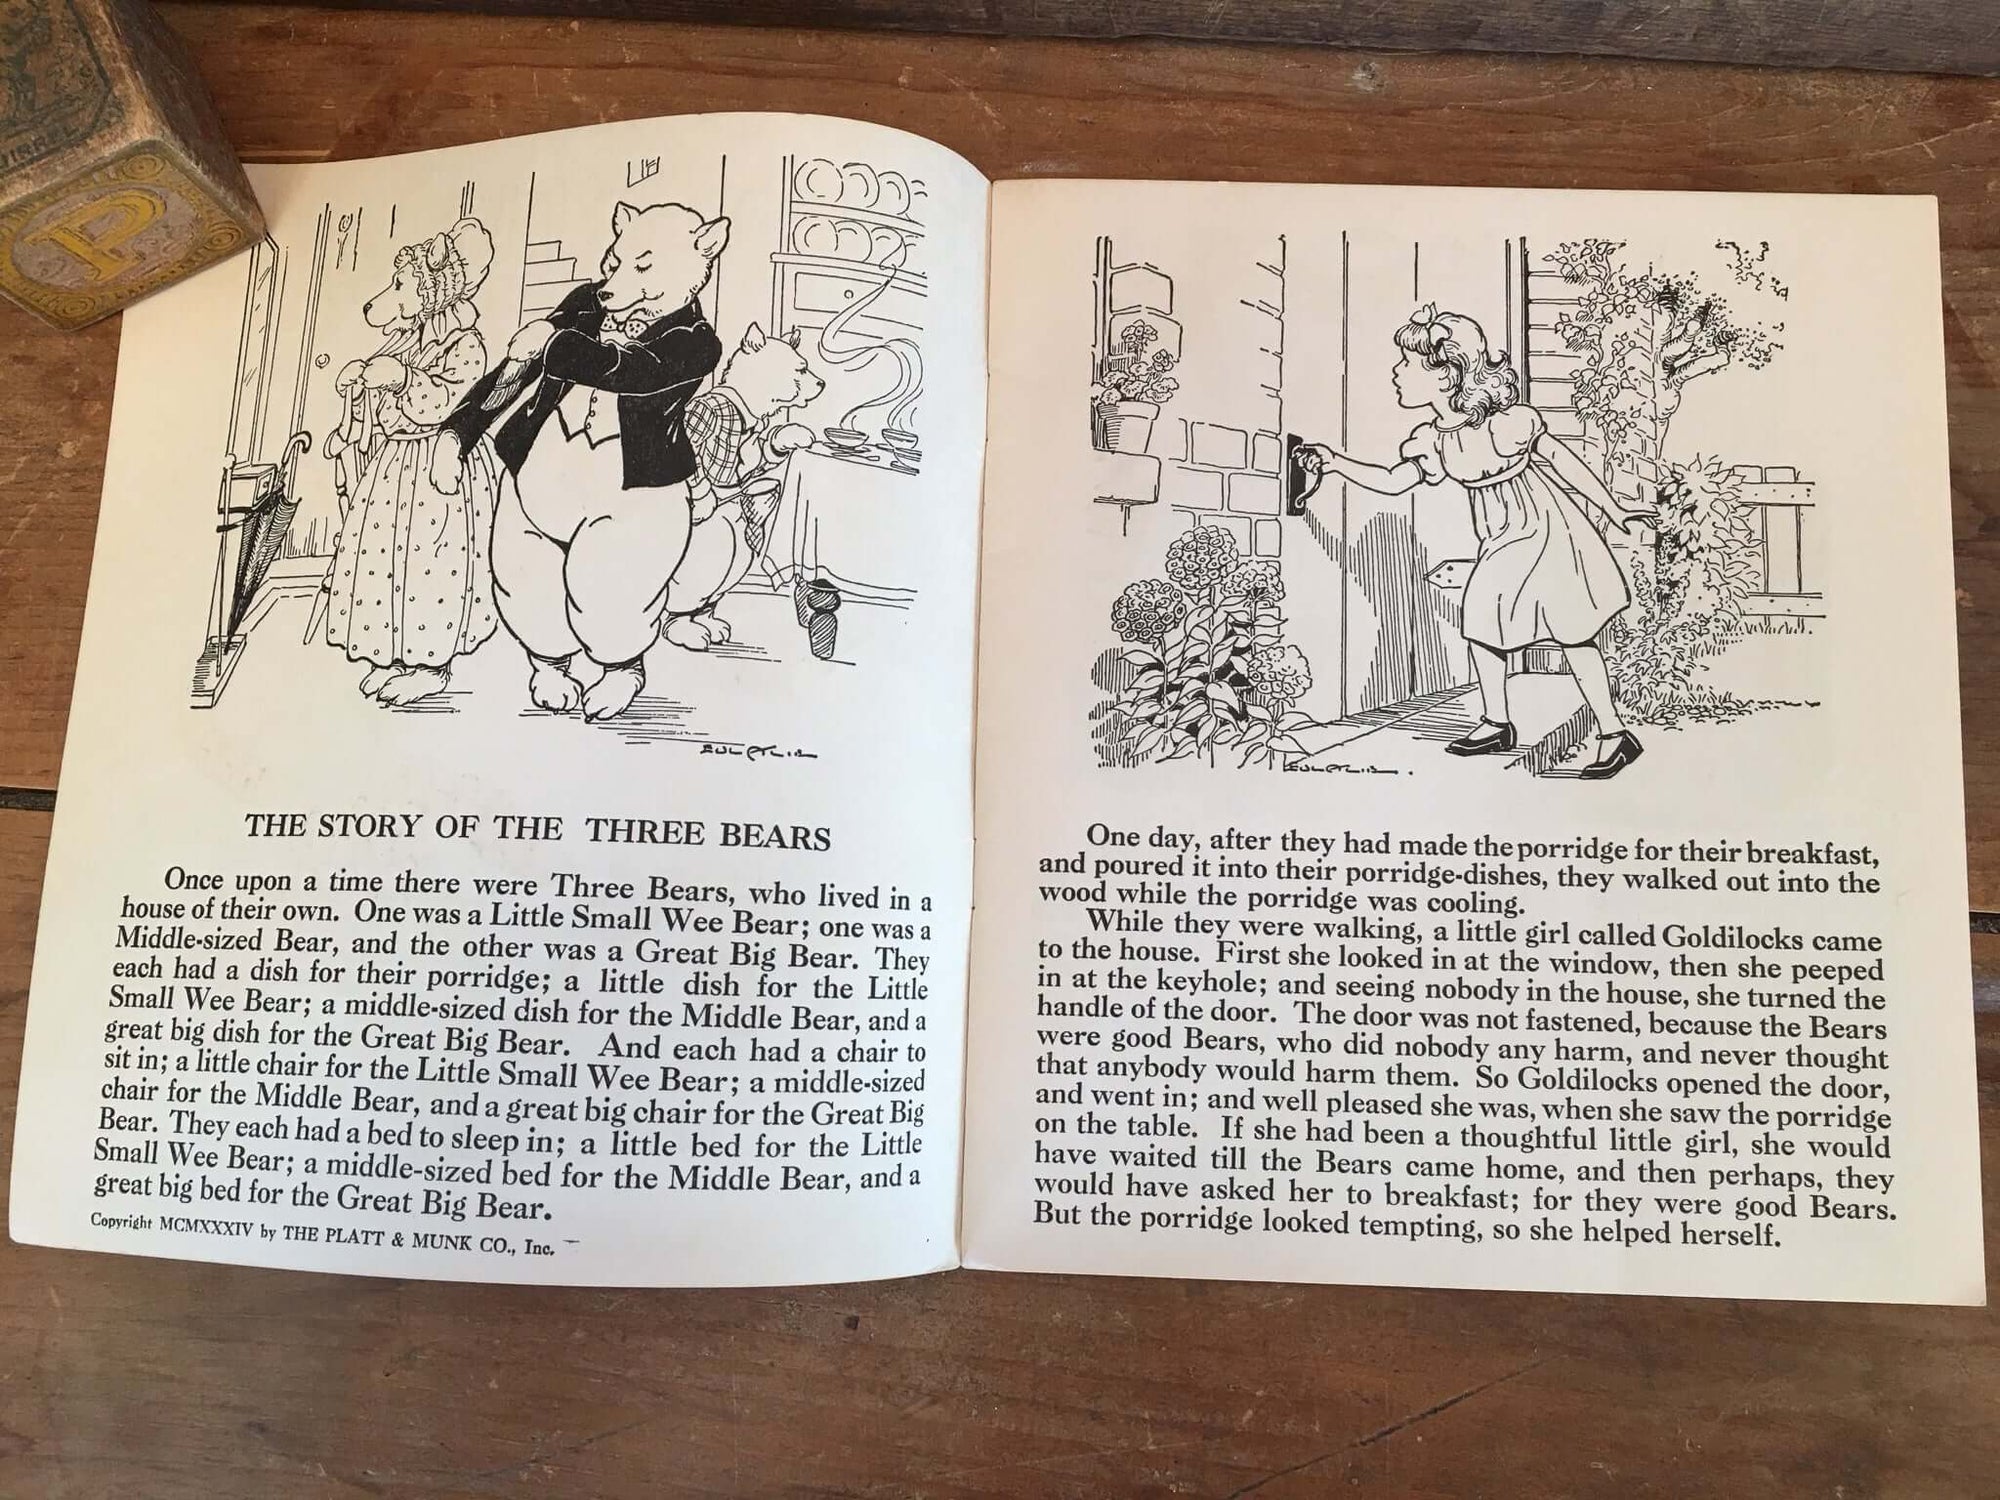 LeHay's Vintage Shop, 1934 “The Three Bears” Published by Platt & Munk Co Inc